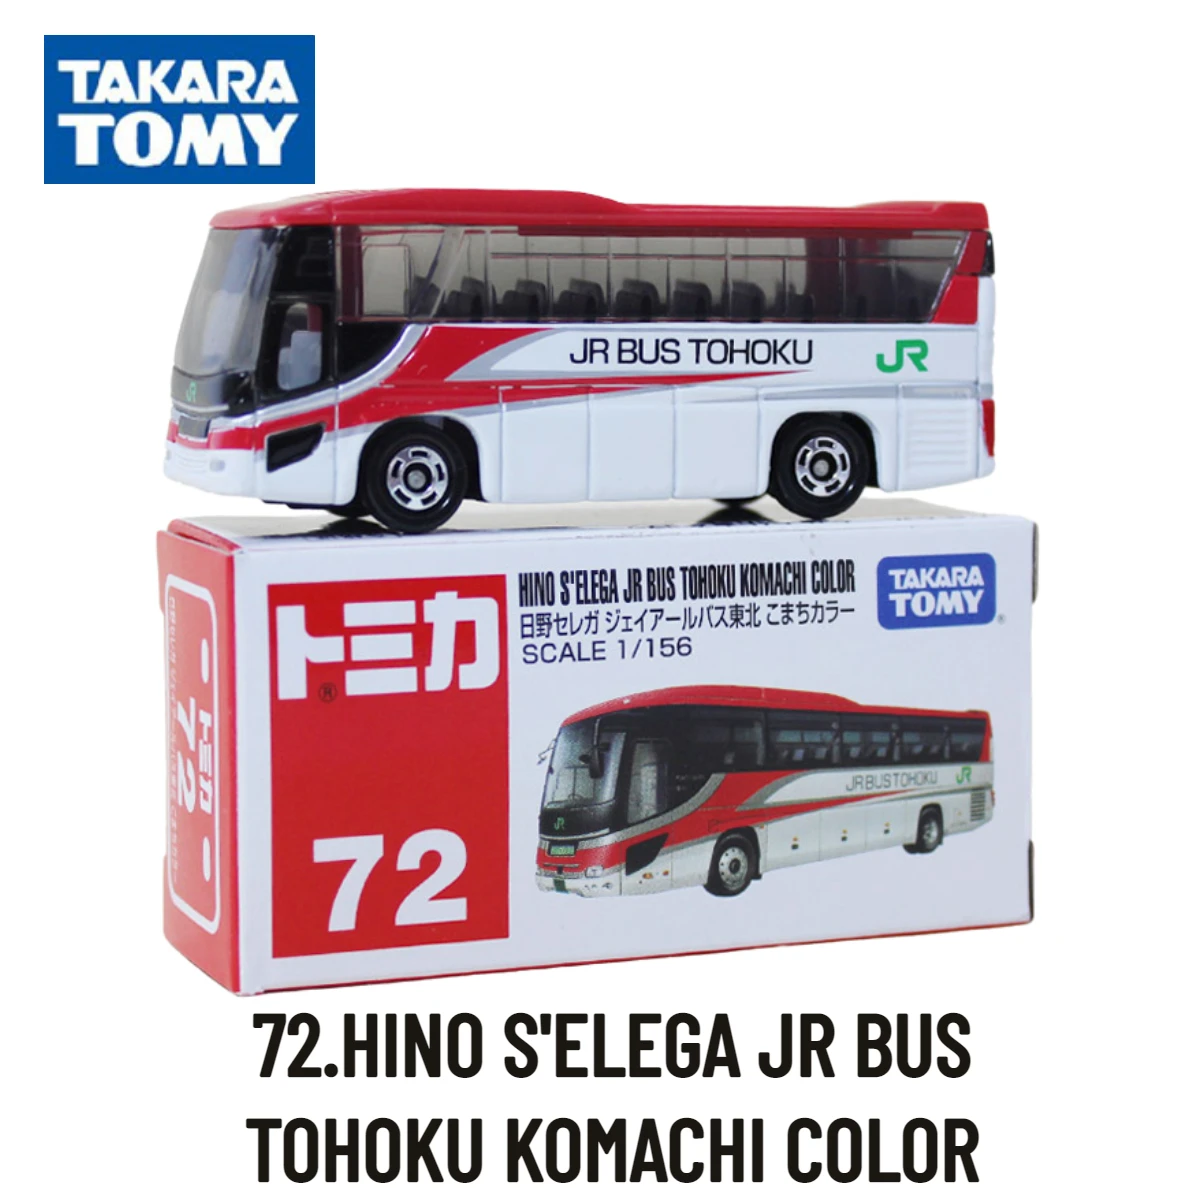 Takara Tomy Tomica Classic 61-90, 72.HINO S'ELEGA JR BUS Scale Car Model Replica Collection, Kids Xmas Gift Toys for Boys